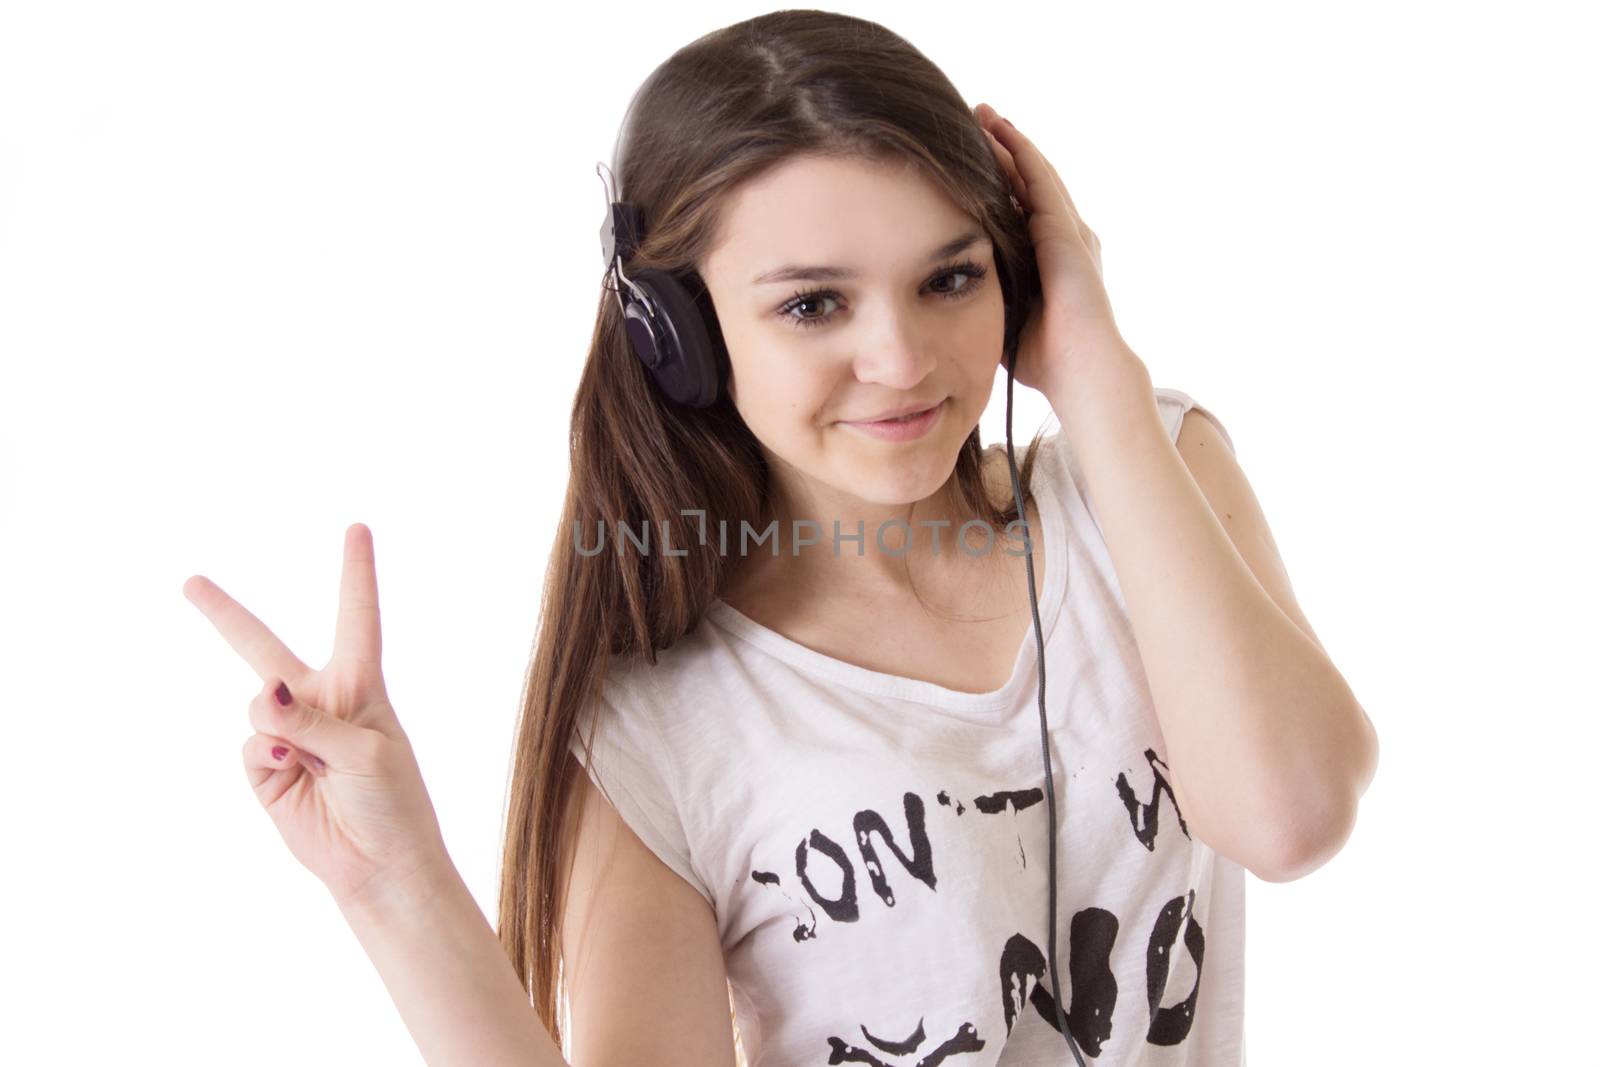 Joyful teen girl with headphones showing victory sign over white